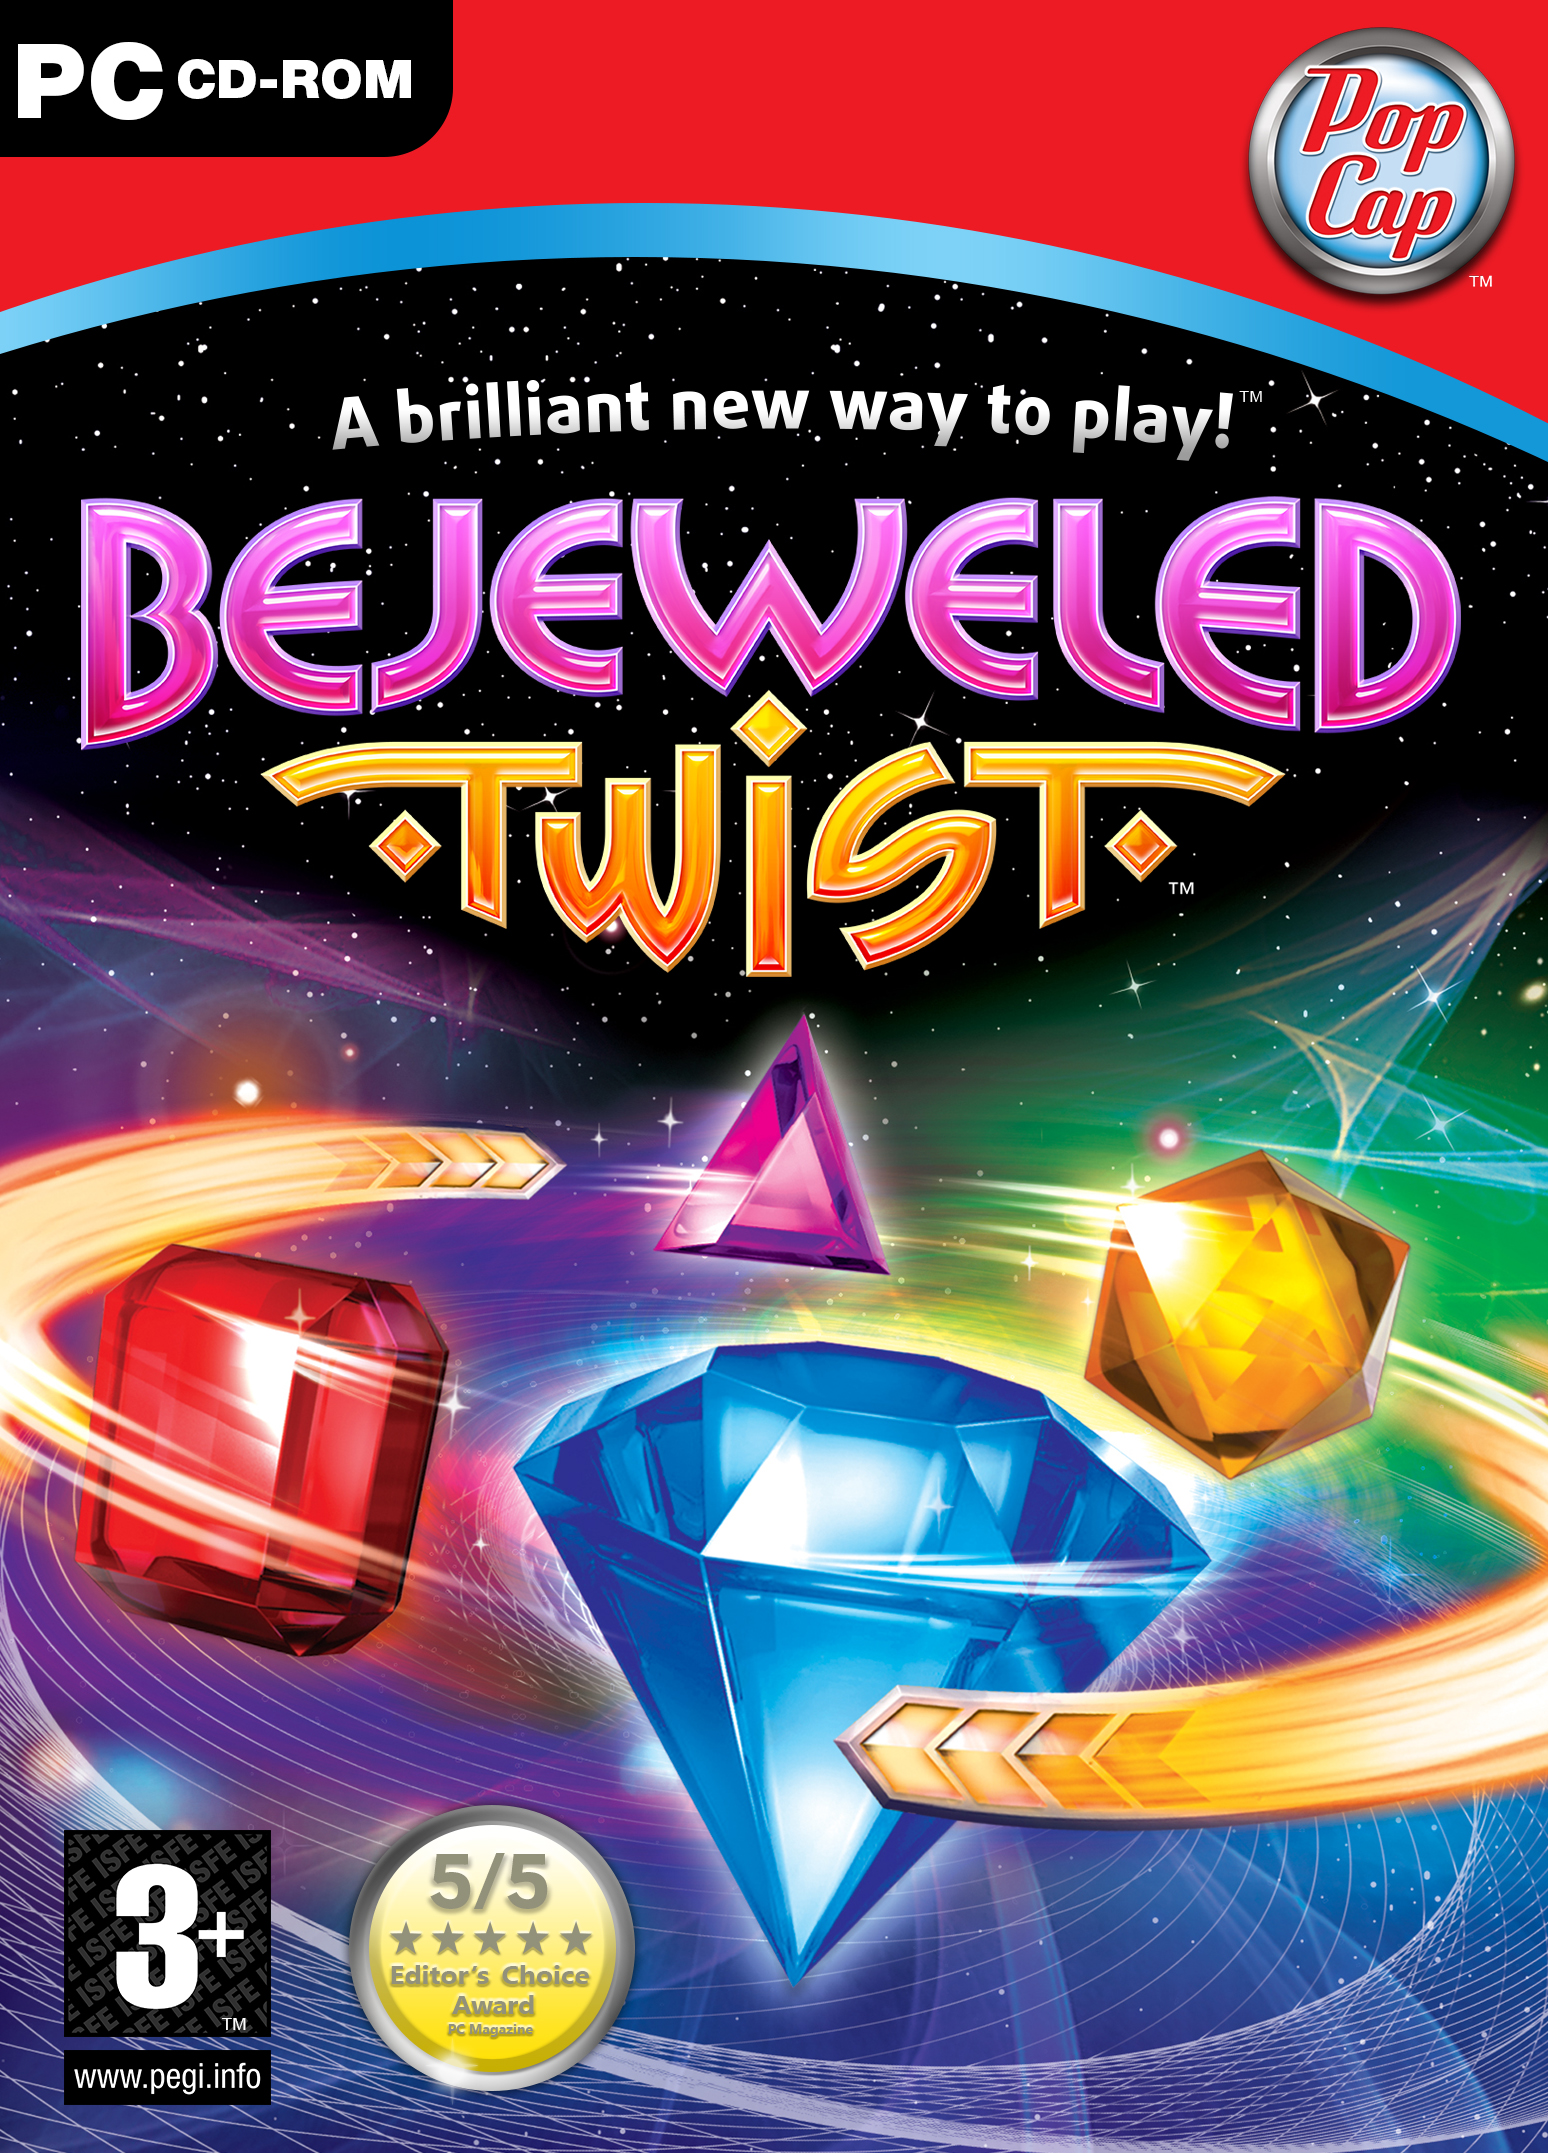 bejeweled twist platforms